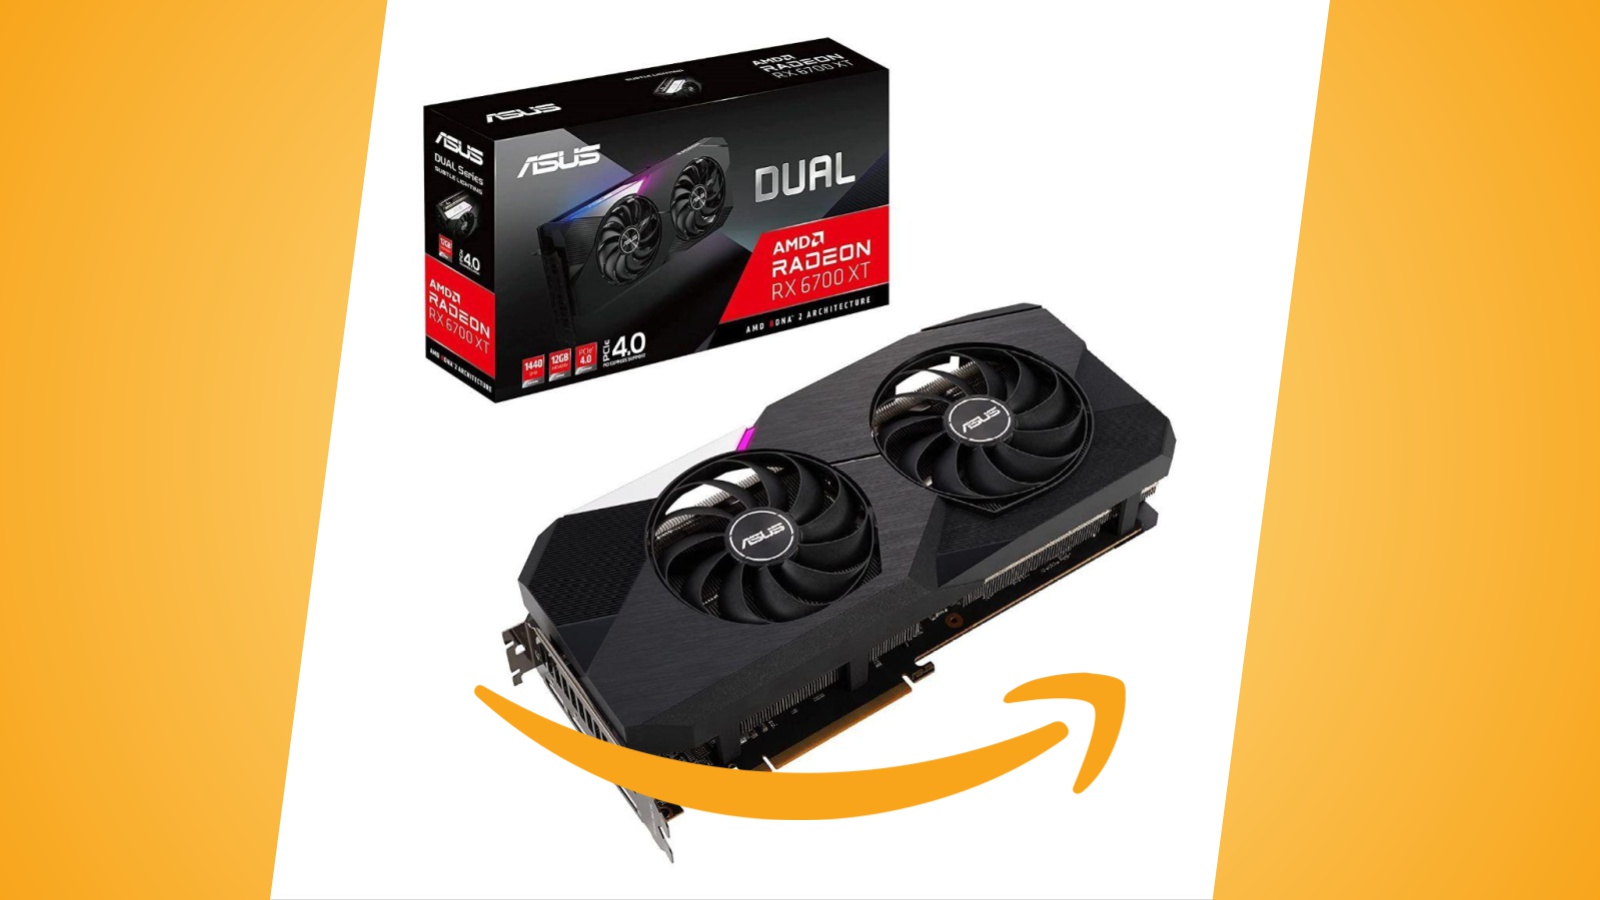 Offerte Amazon: ASUS DUAL AMD Radeon RX 6700 XT, la GPU è al prezzo minimo storico